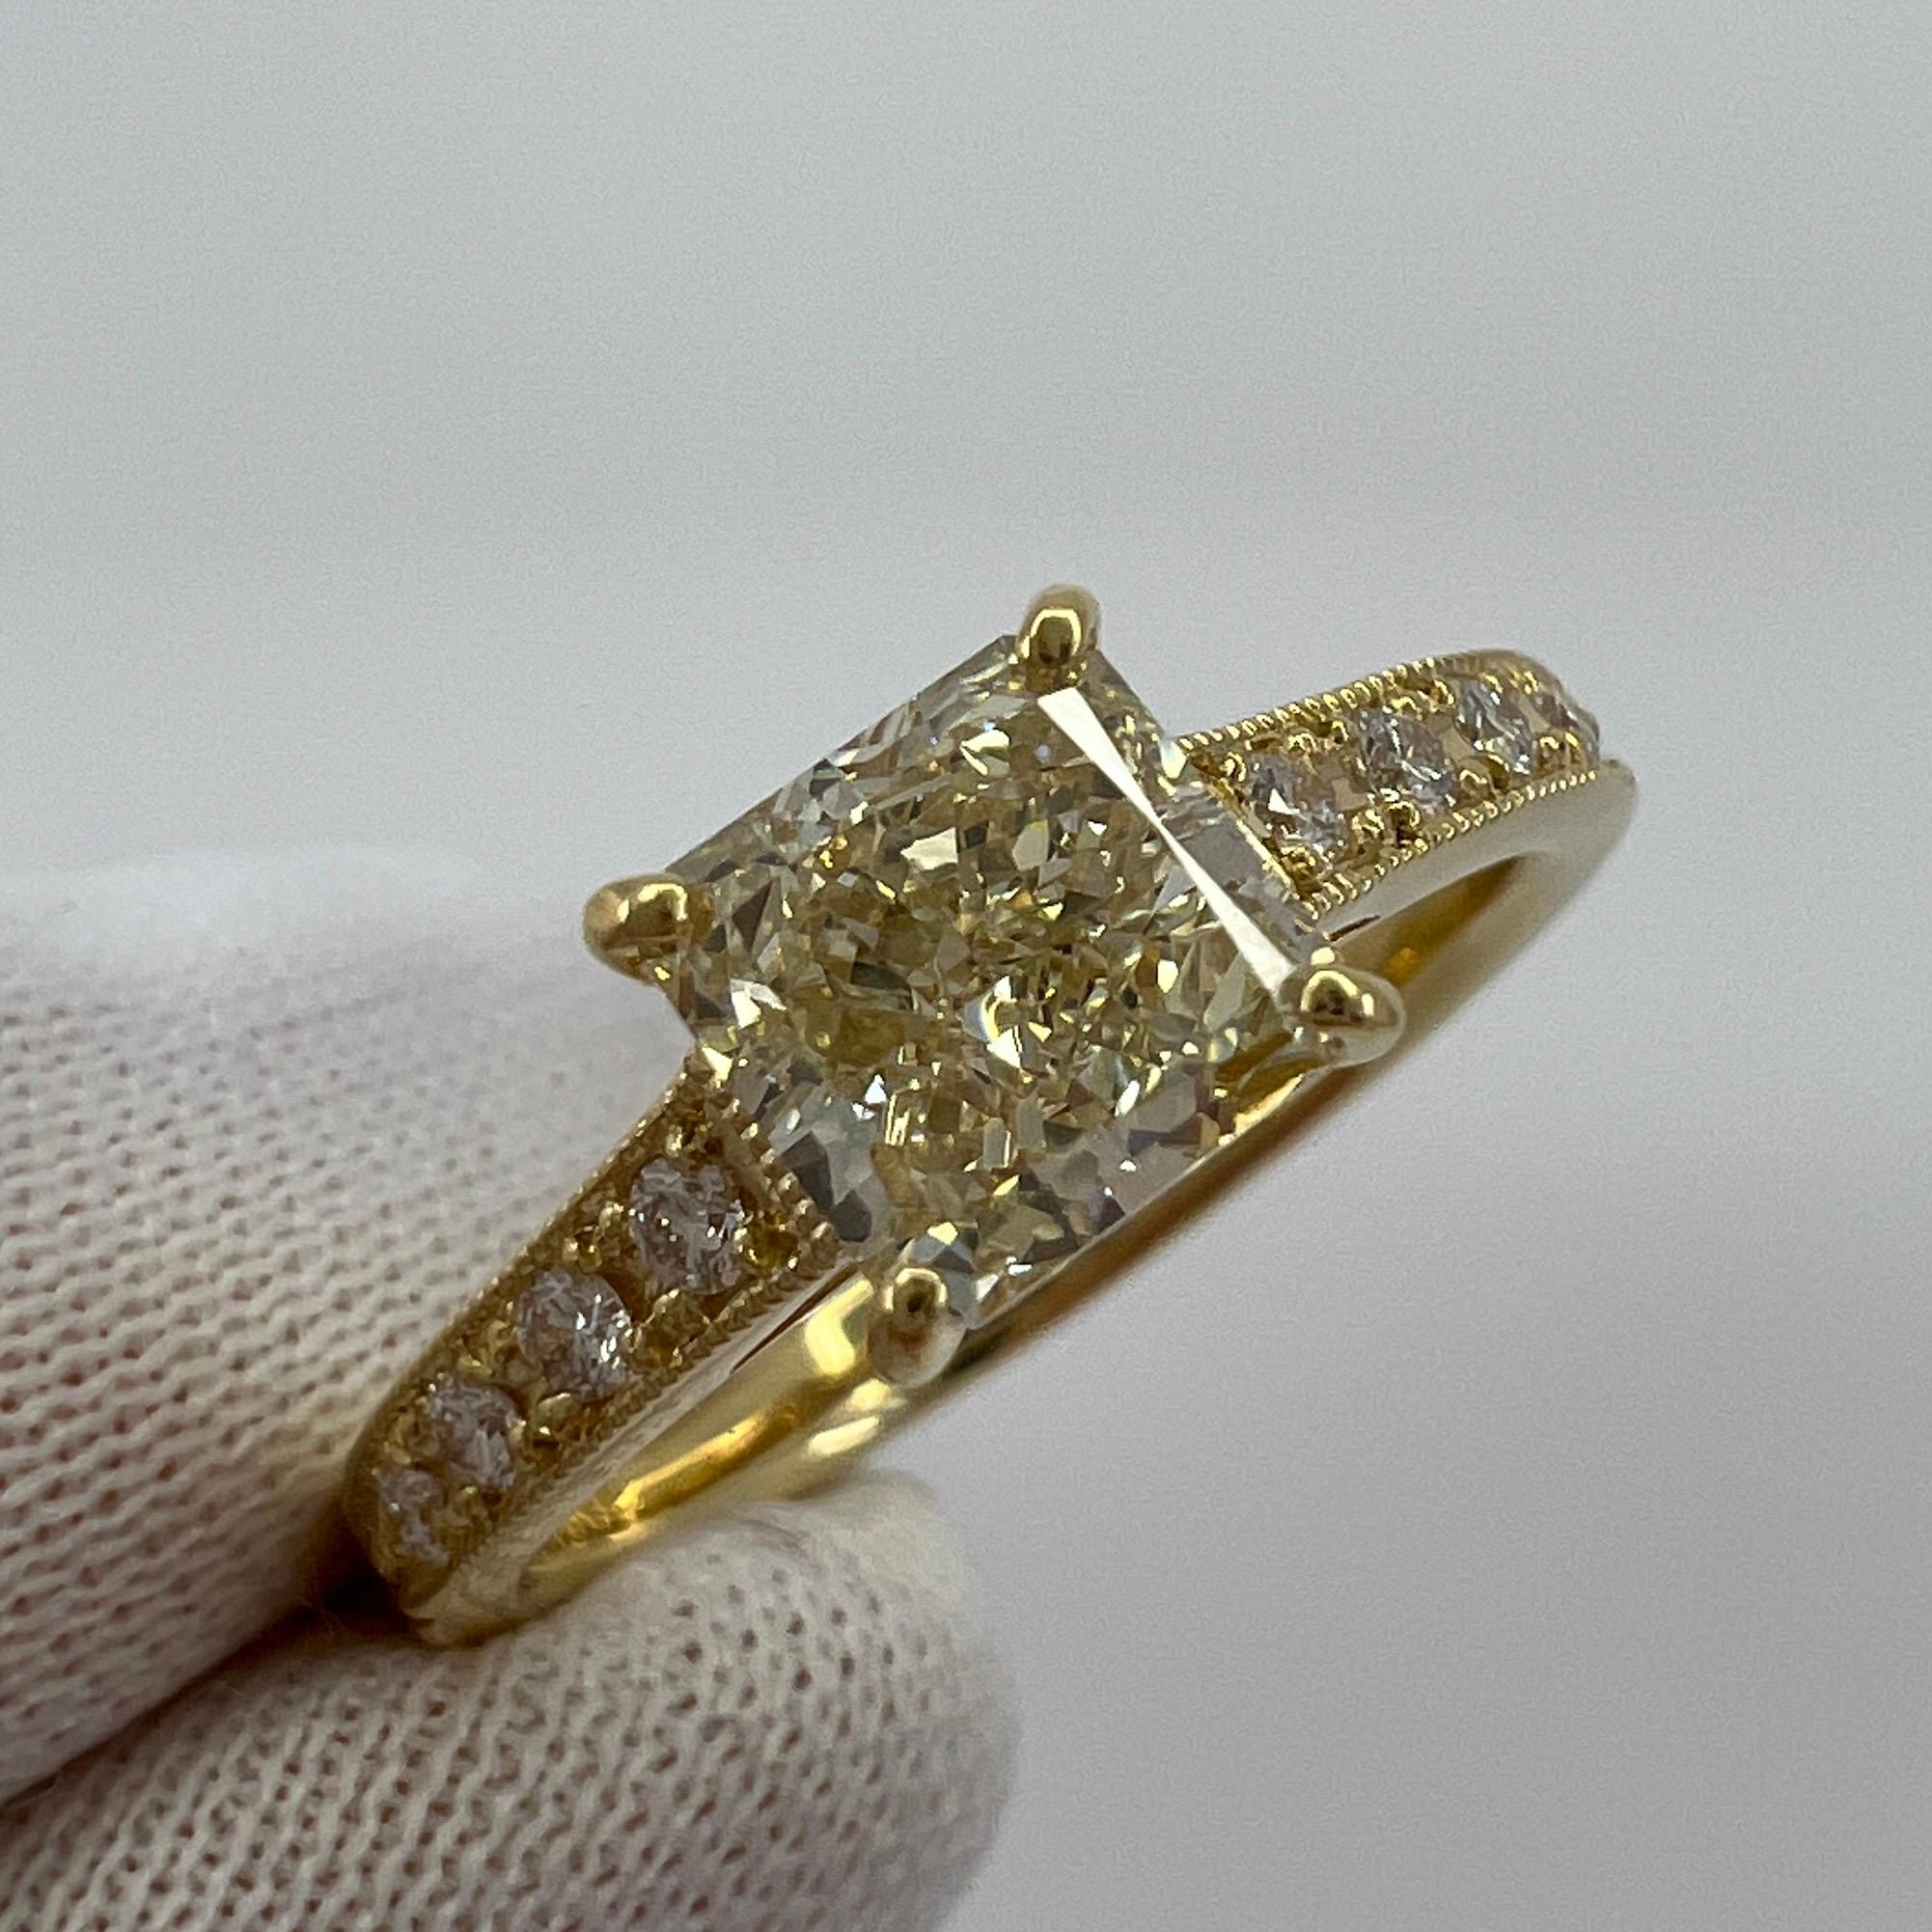 Certified 1.05ct Fancy Light Yellow Cushion Cut Diamond 18k Yellow Gold Ring SI1 For Sale 8